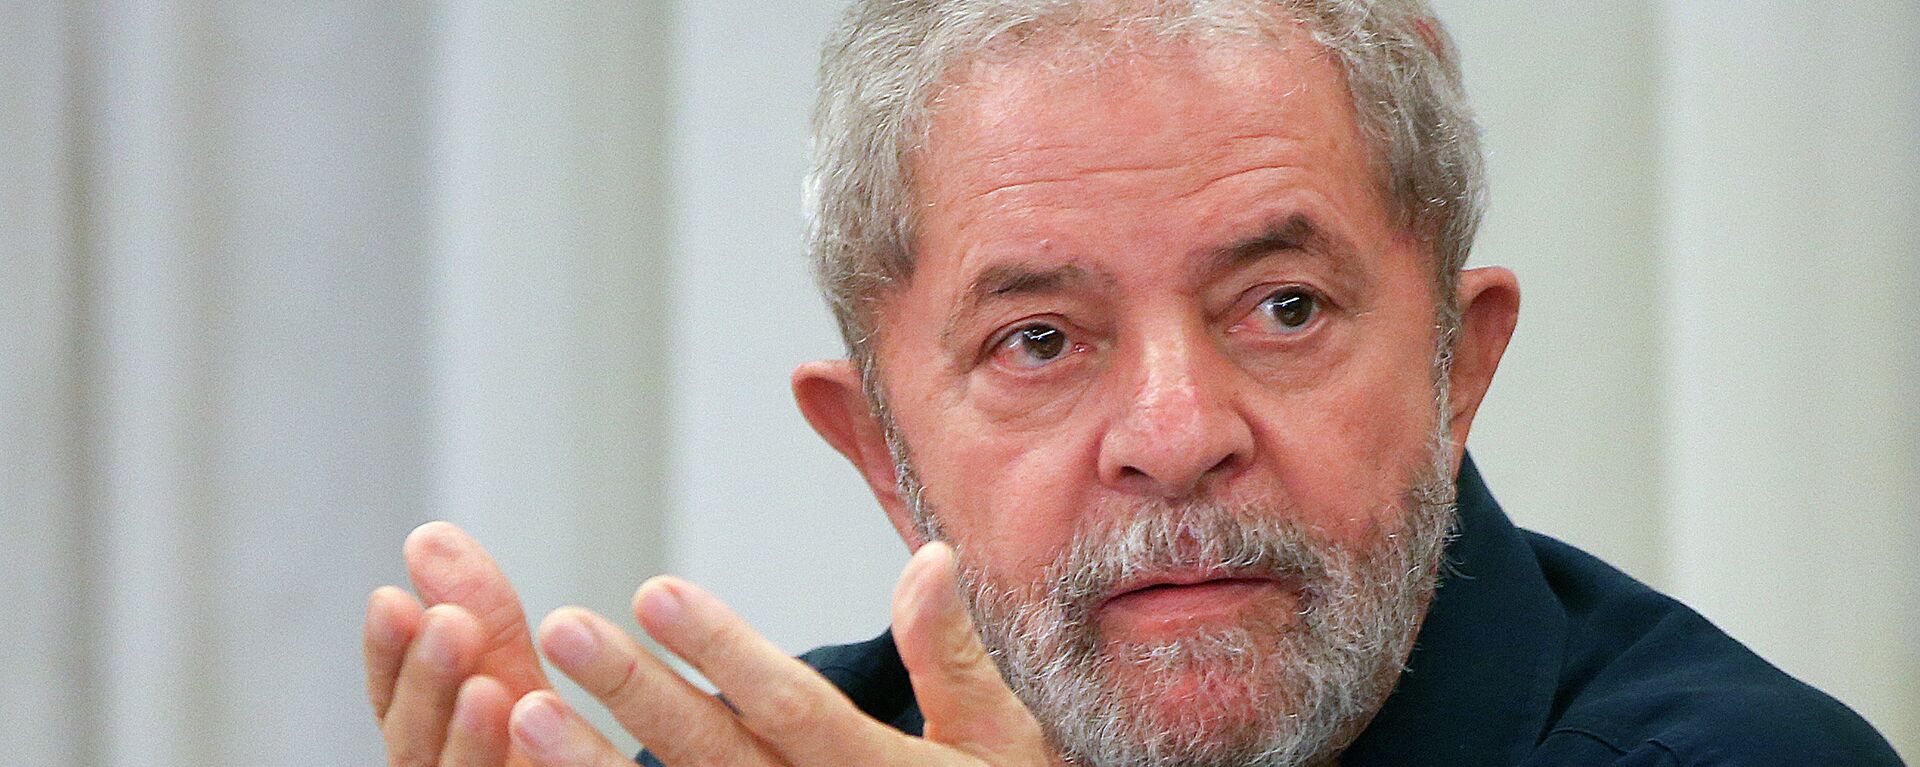 Luiz Inácio Lula da Silva, expresidente de Brasil - Sputnik Mundo, 1920, 22.03.2021